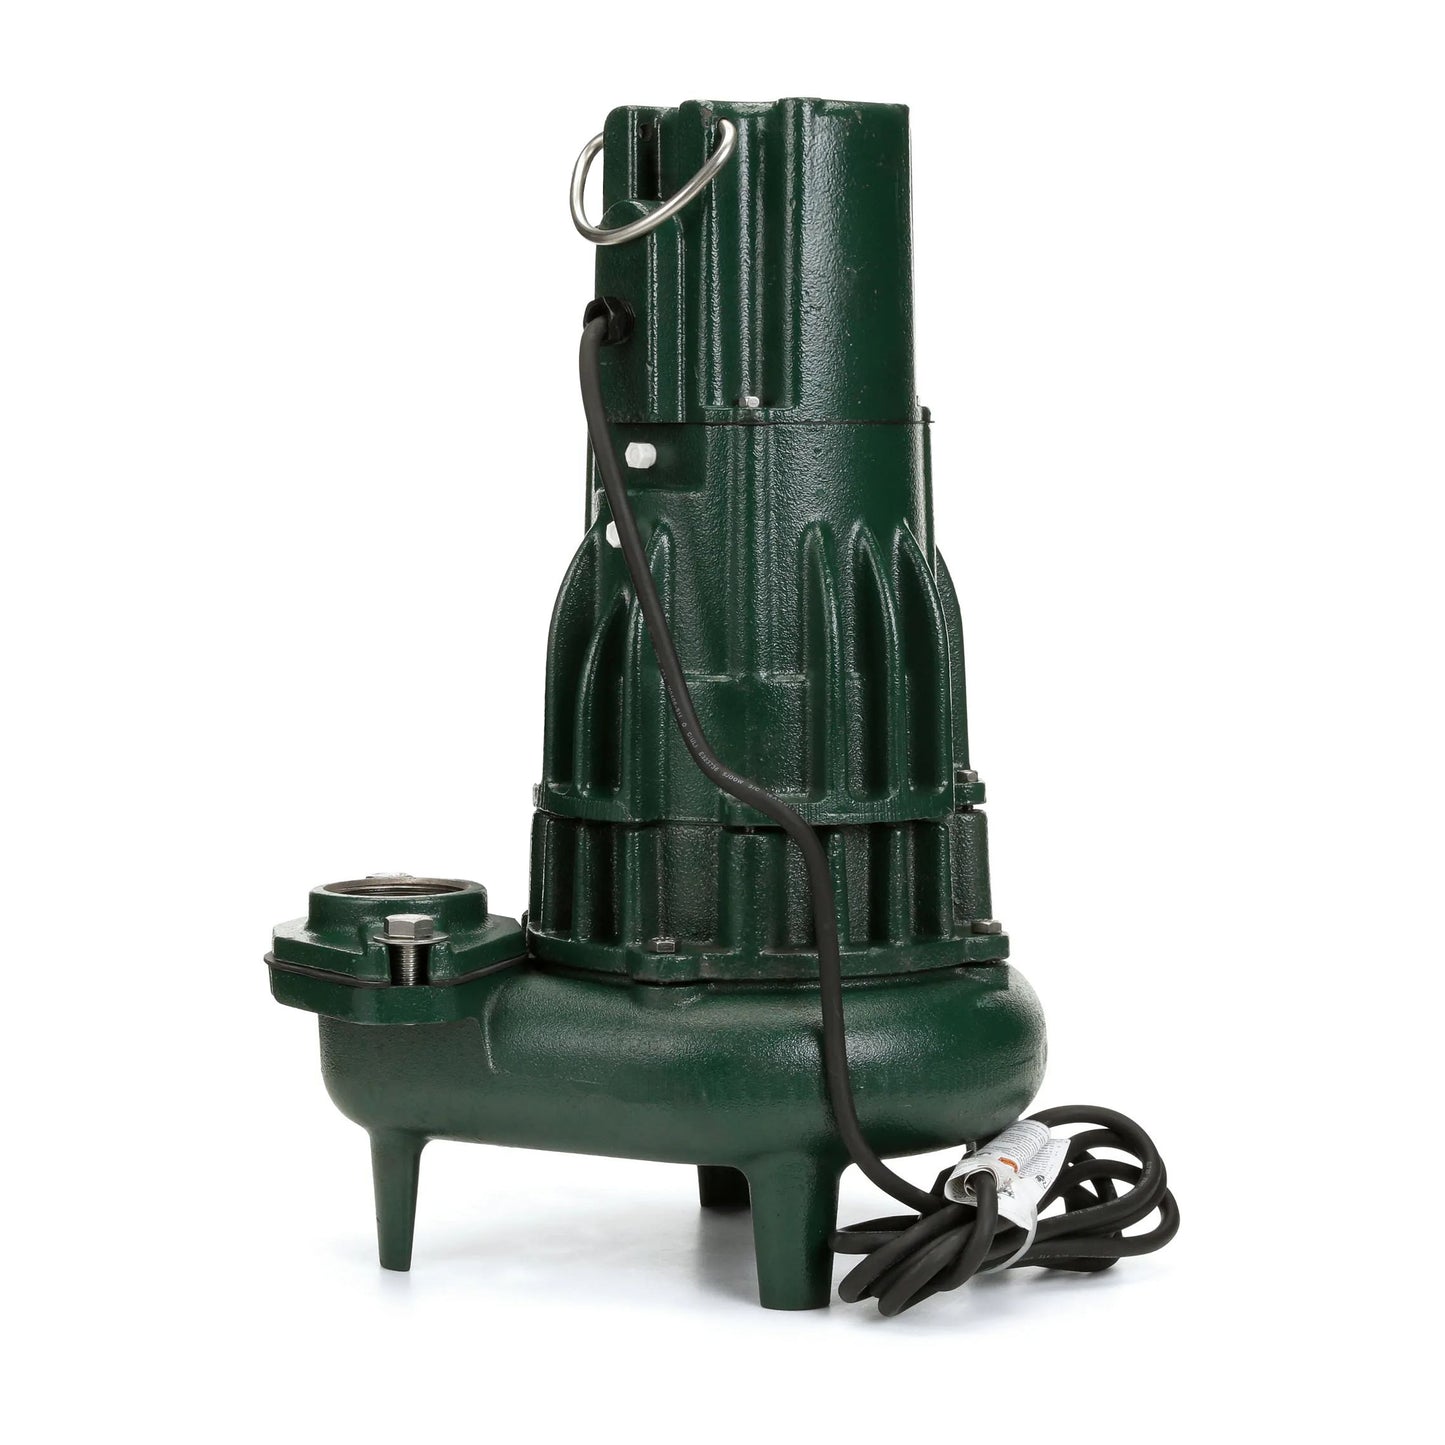 282-0004 - E282 Series Non-Automatic Cast Iron Sewage Pump, 230V, 1/2 HP